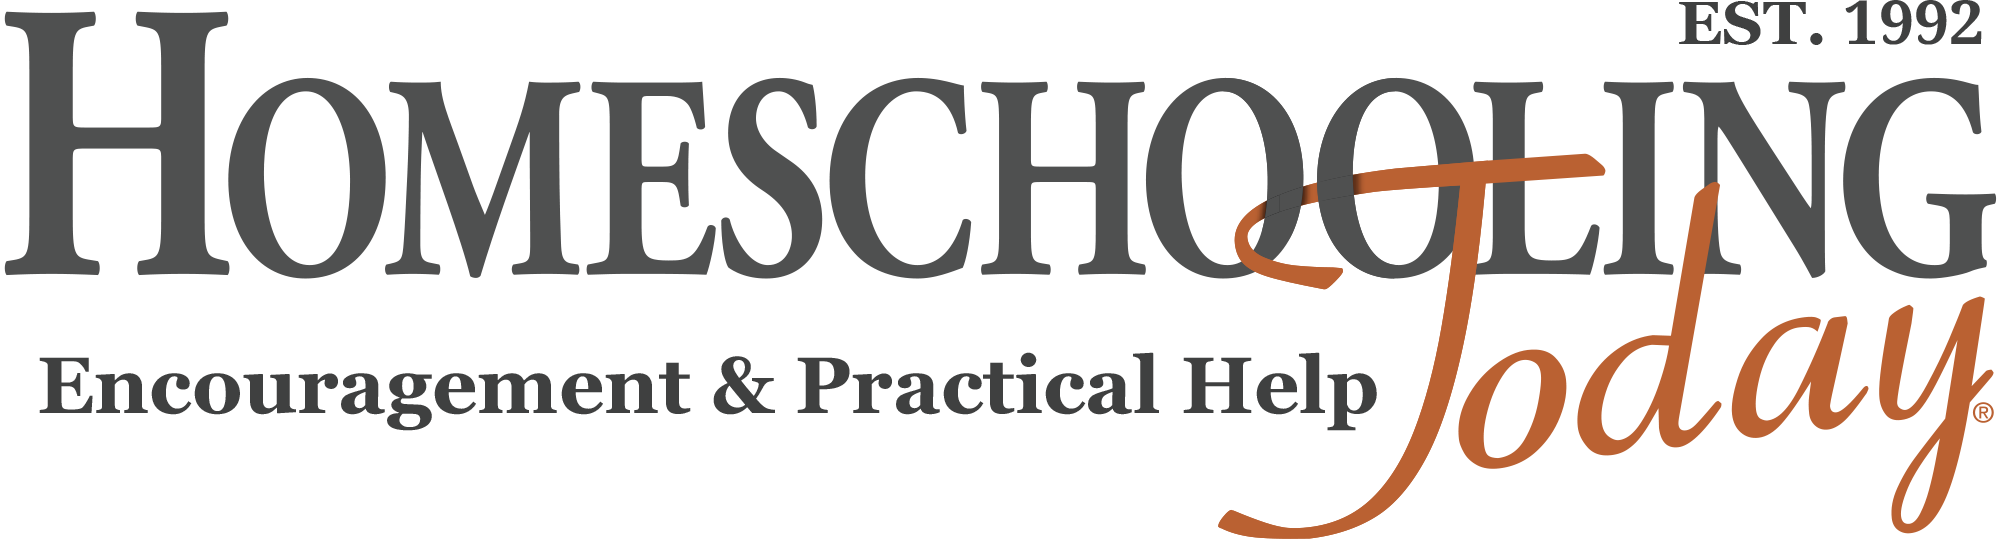 Homeschooling Today logo